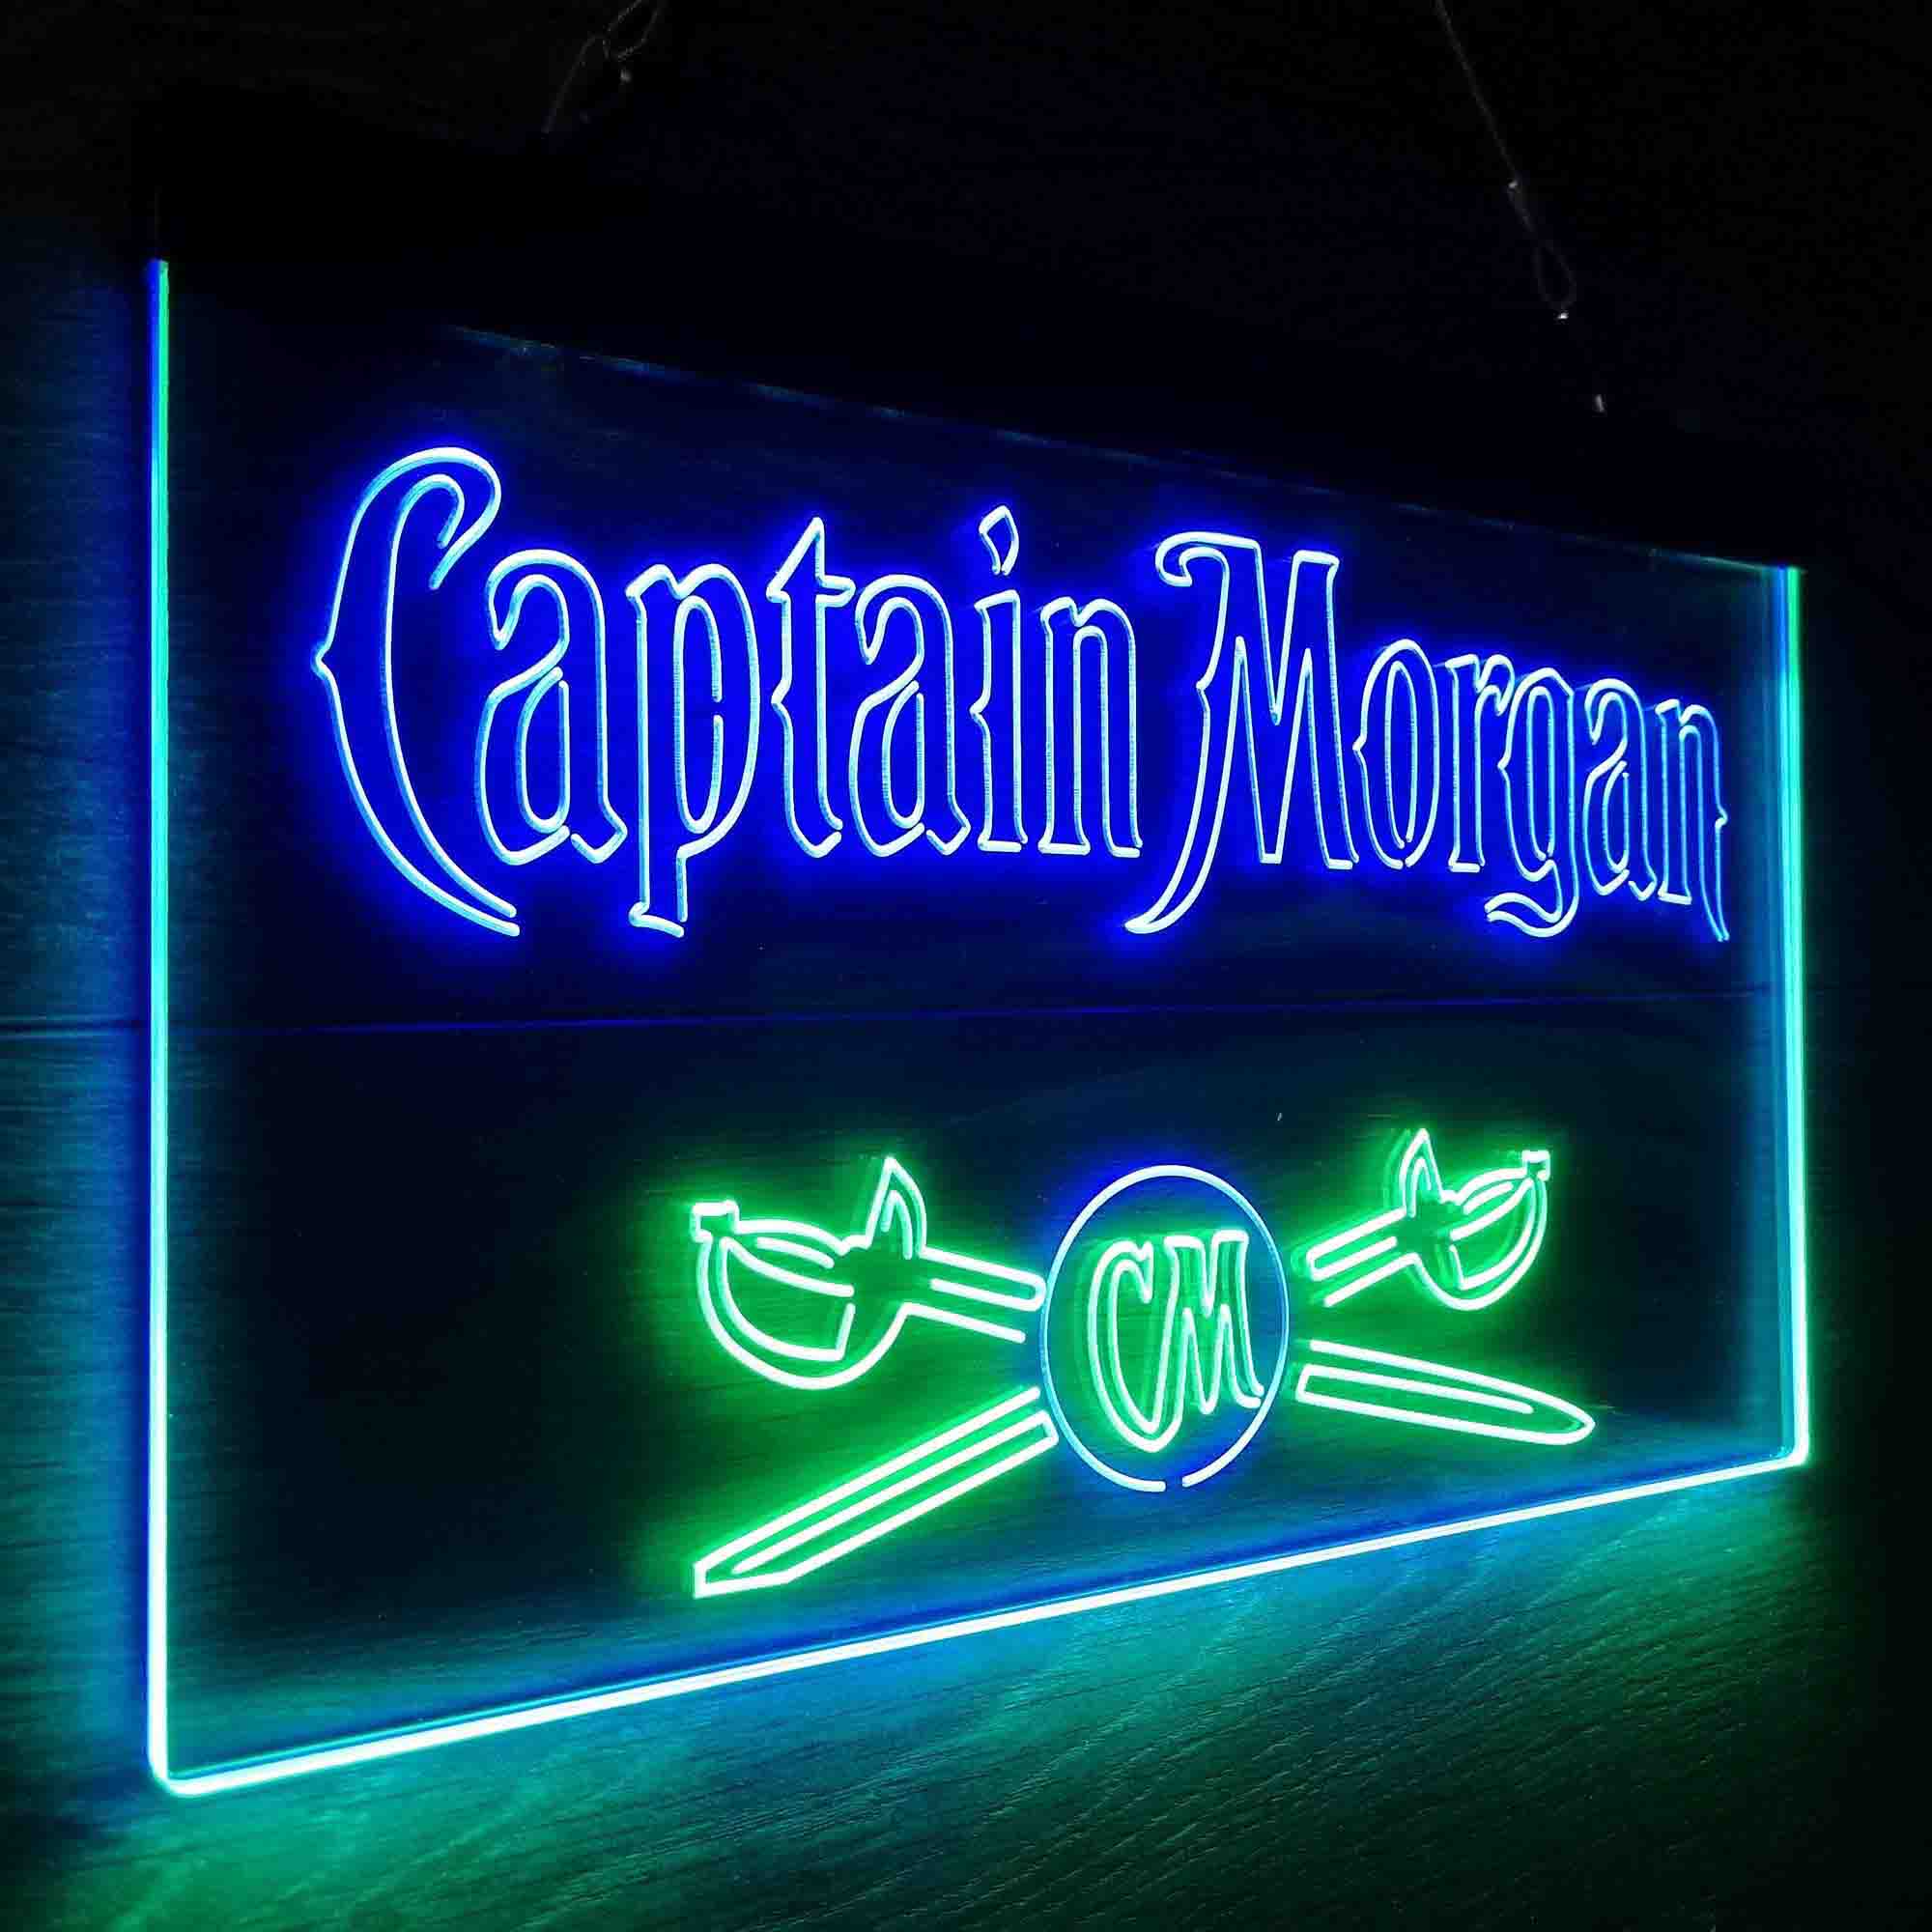 CM Captain Morgan Neon-Like LED Sign - ProLedSign